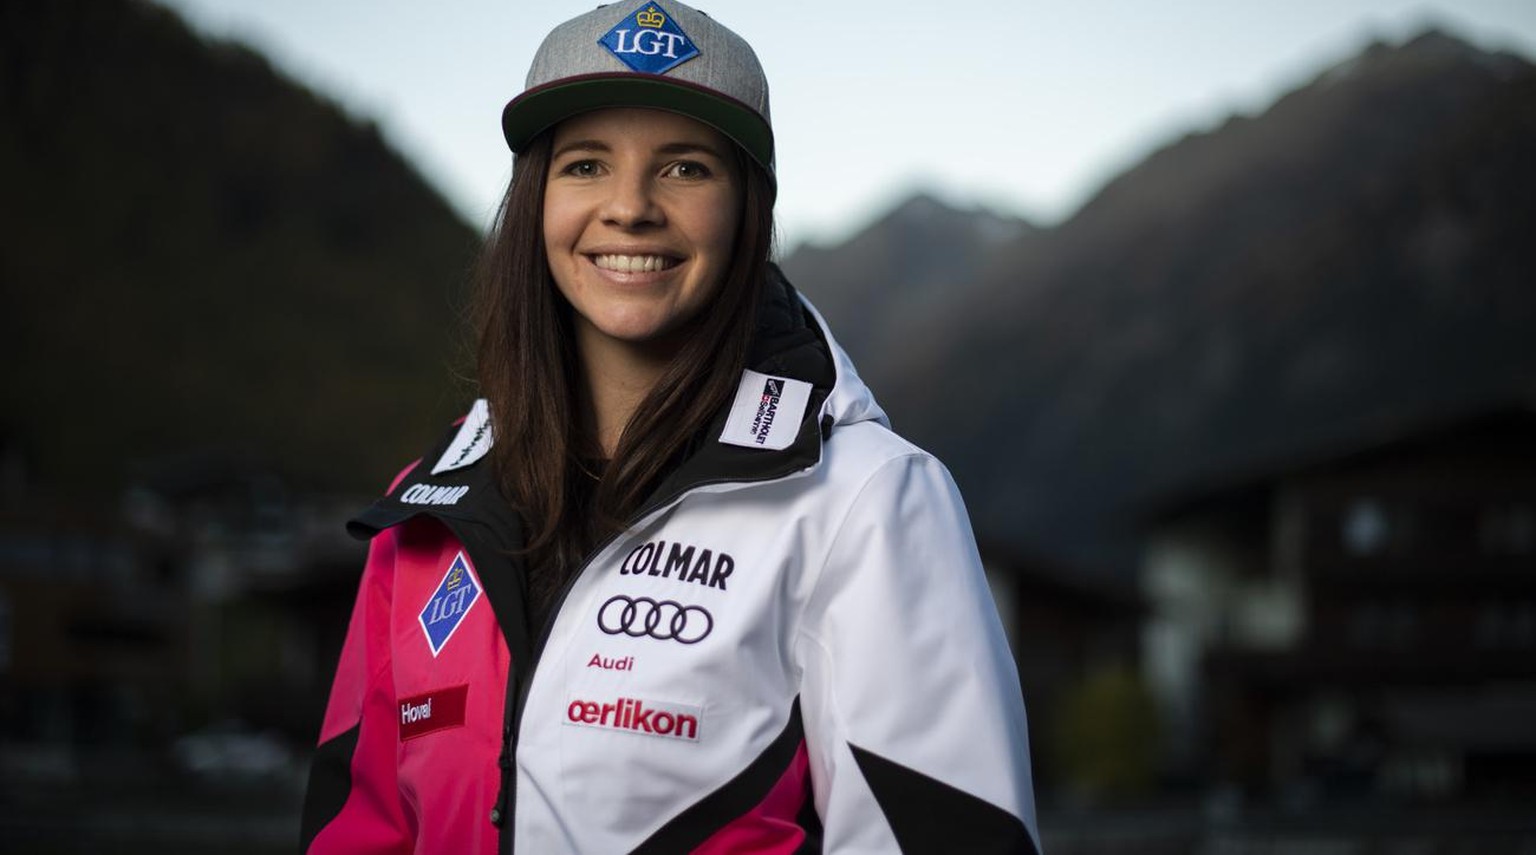 Tina Weirather of Liechtenstein is pictured during a press event of the FIS Alpine Ski World Cup season in Soelden, Austria, on Thursday, October 25, 2018. The Alpine Skiing World Cup season 2018/2019 ...